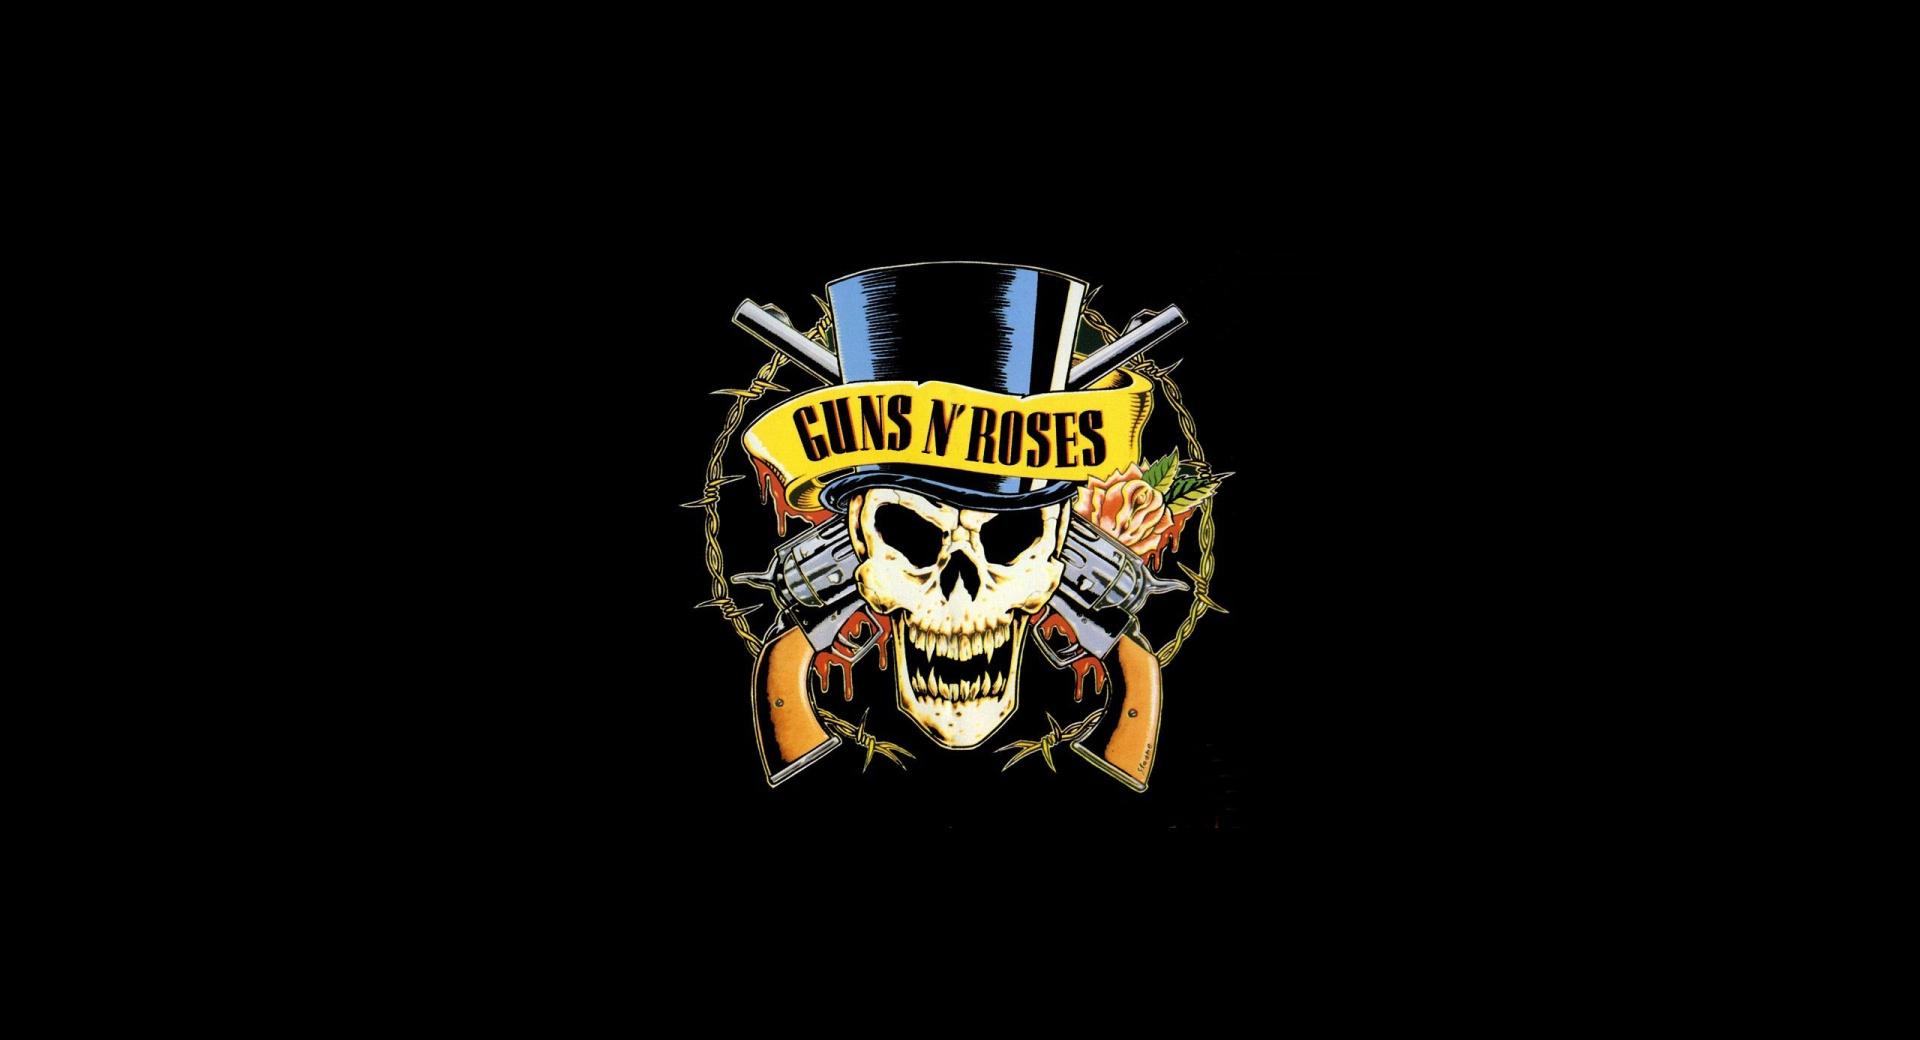 Guns n Roses Logo (HD) at 1600 x 1200 size wallpapers HD quality